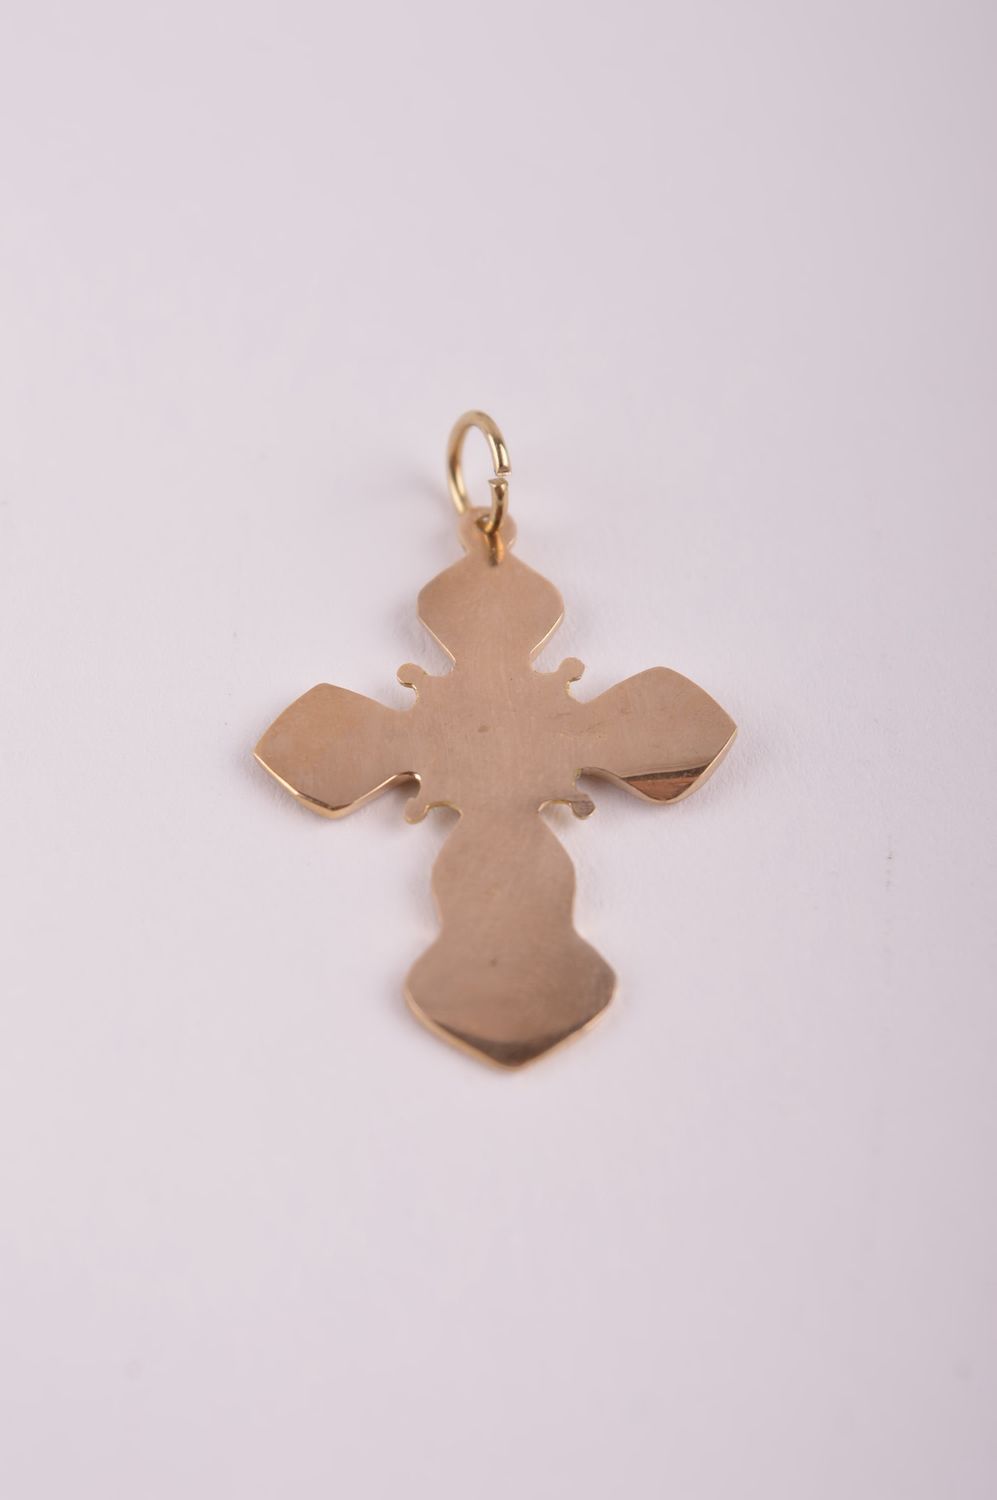 Unusual handmade brass cross pendant gemstone pendant cross jewelers ideas photo 3